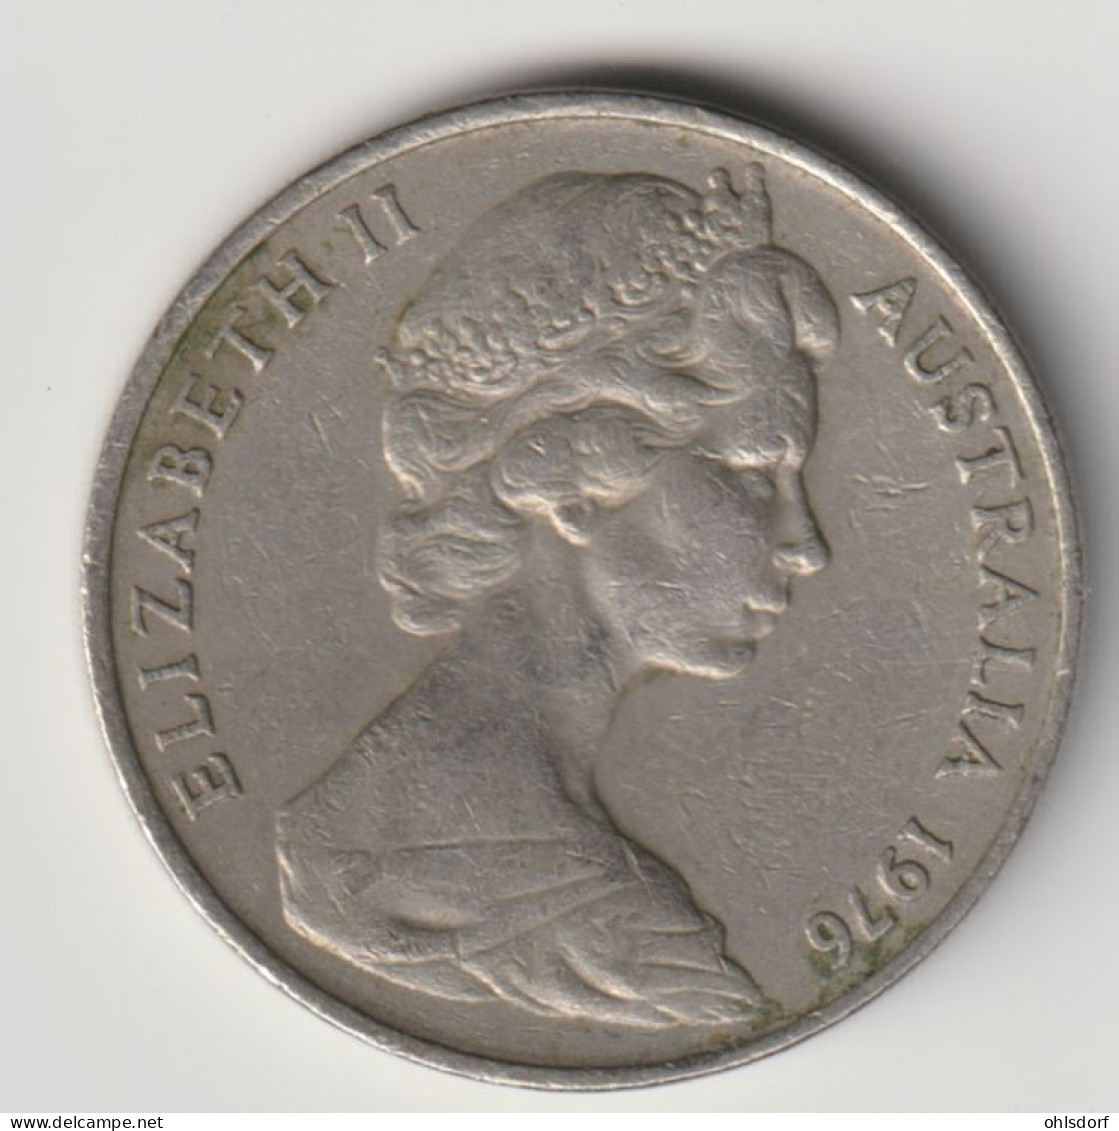 AUSTRALIA 1976: 20 Cents, KM 66 - 20 Cents